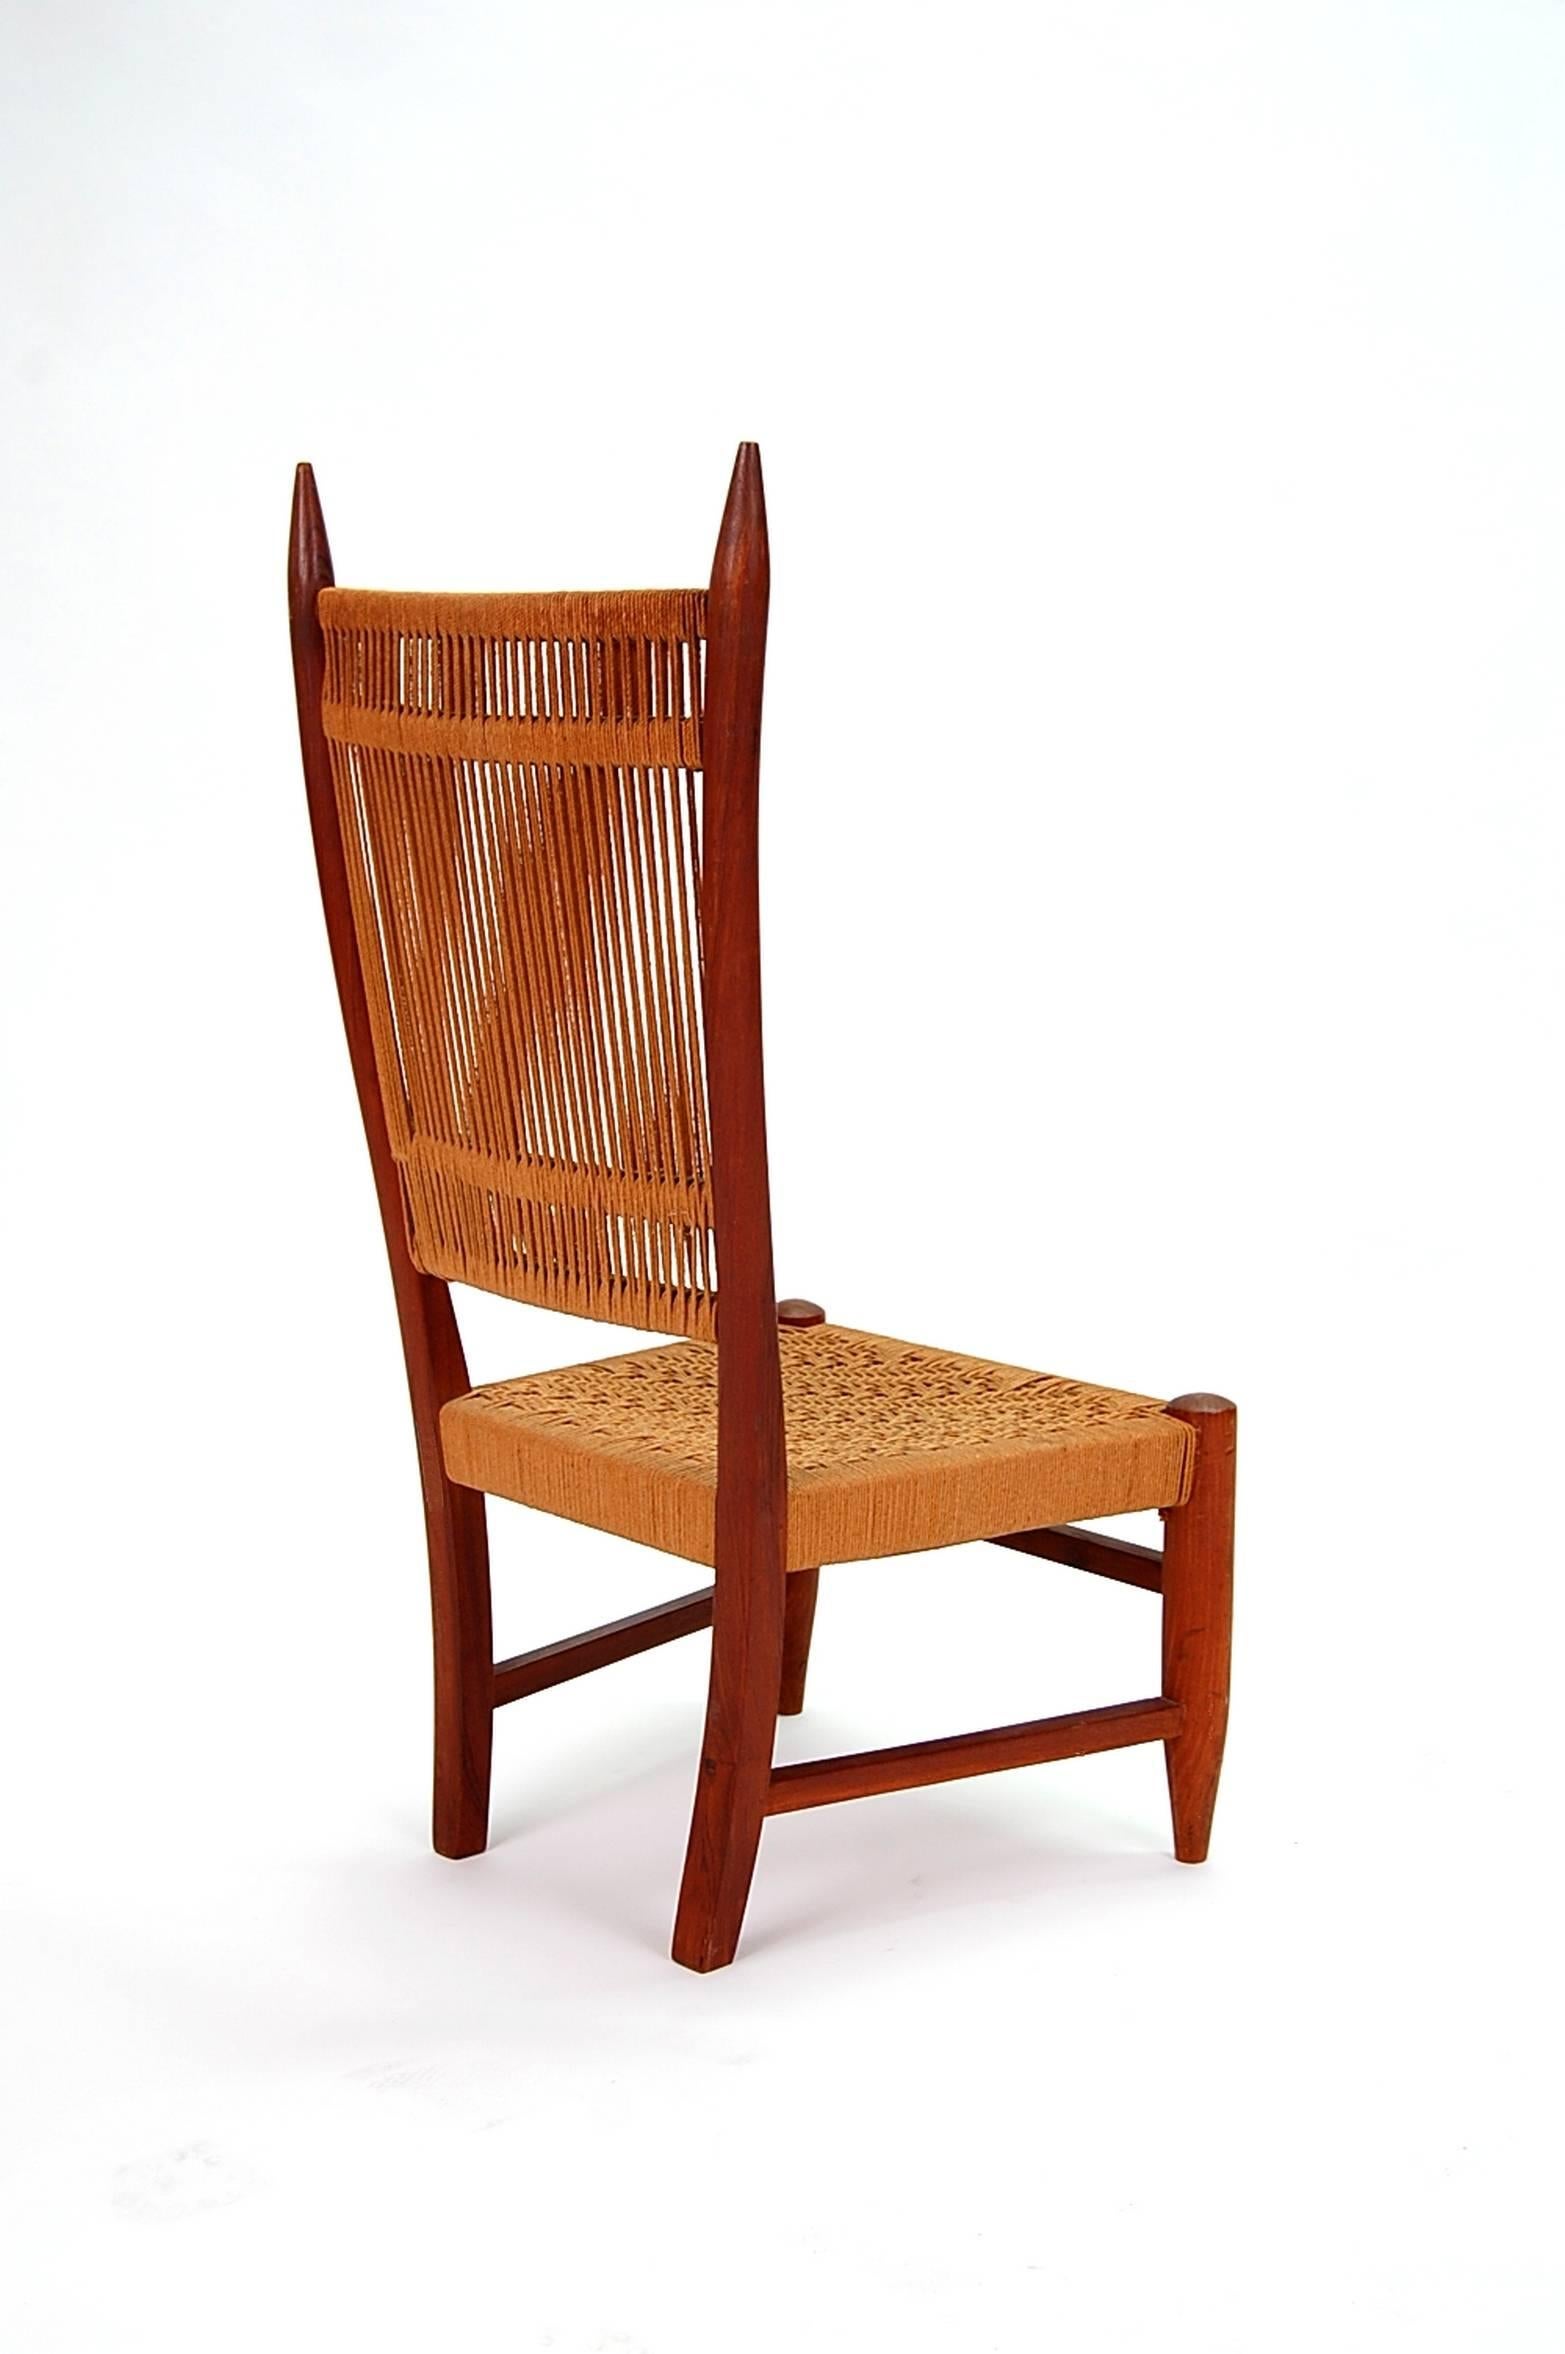 Swedish Diminutive Scandinavian Chair in Teak